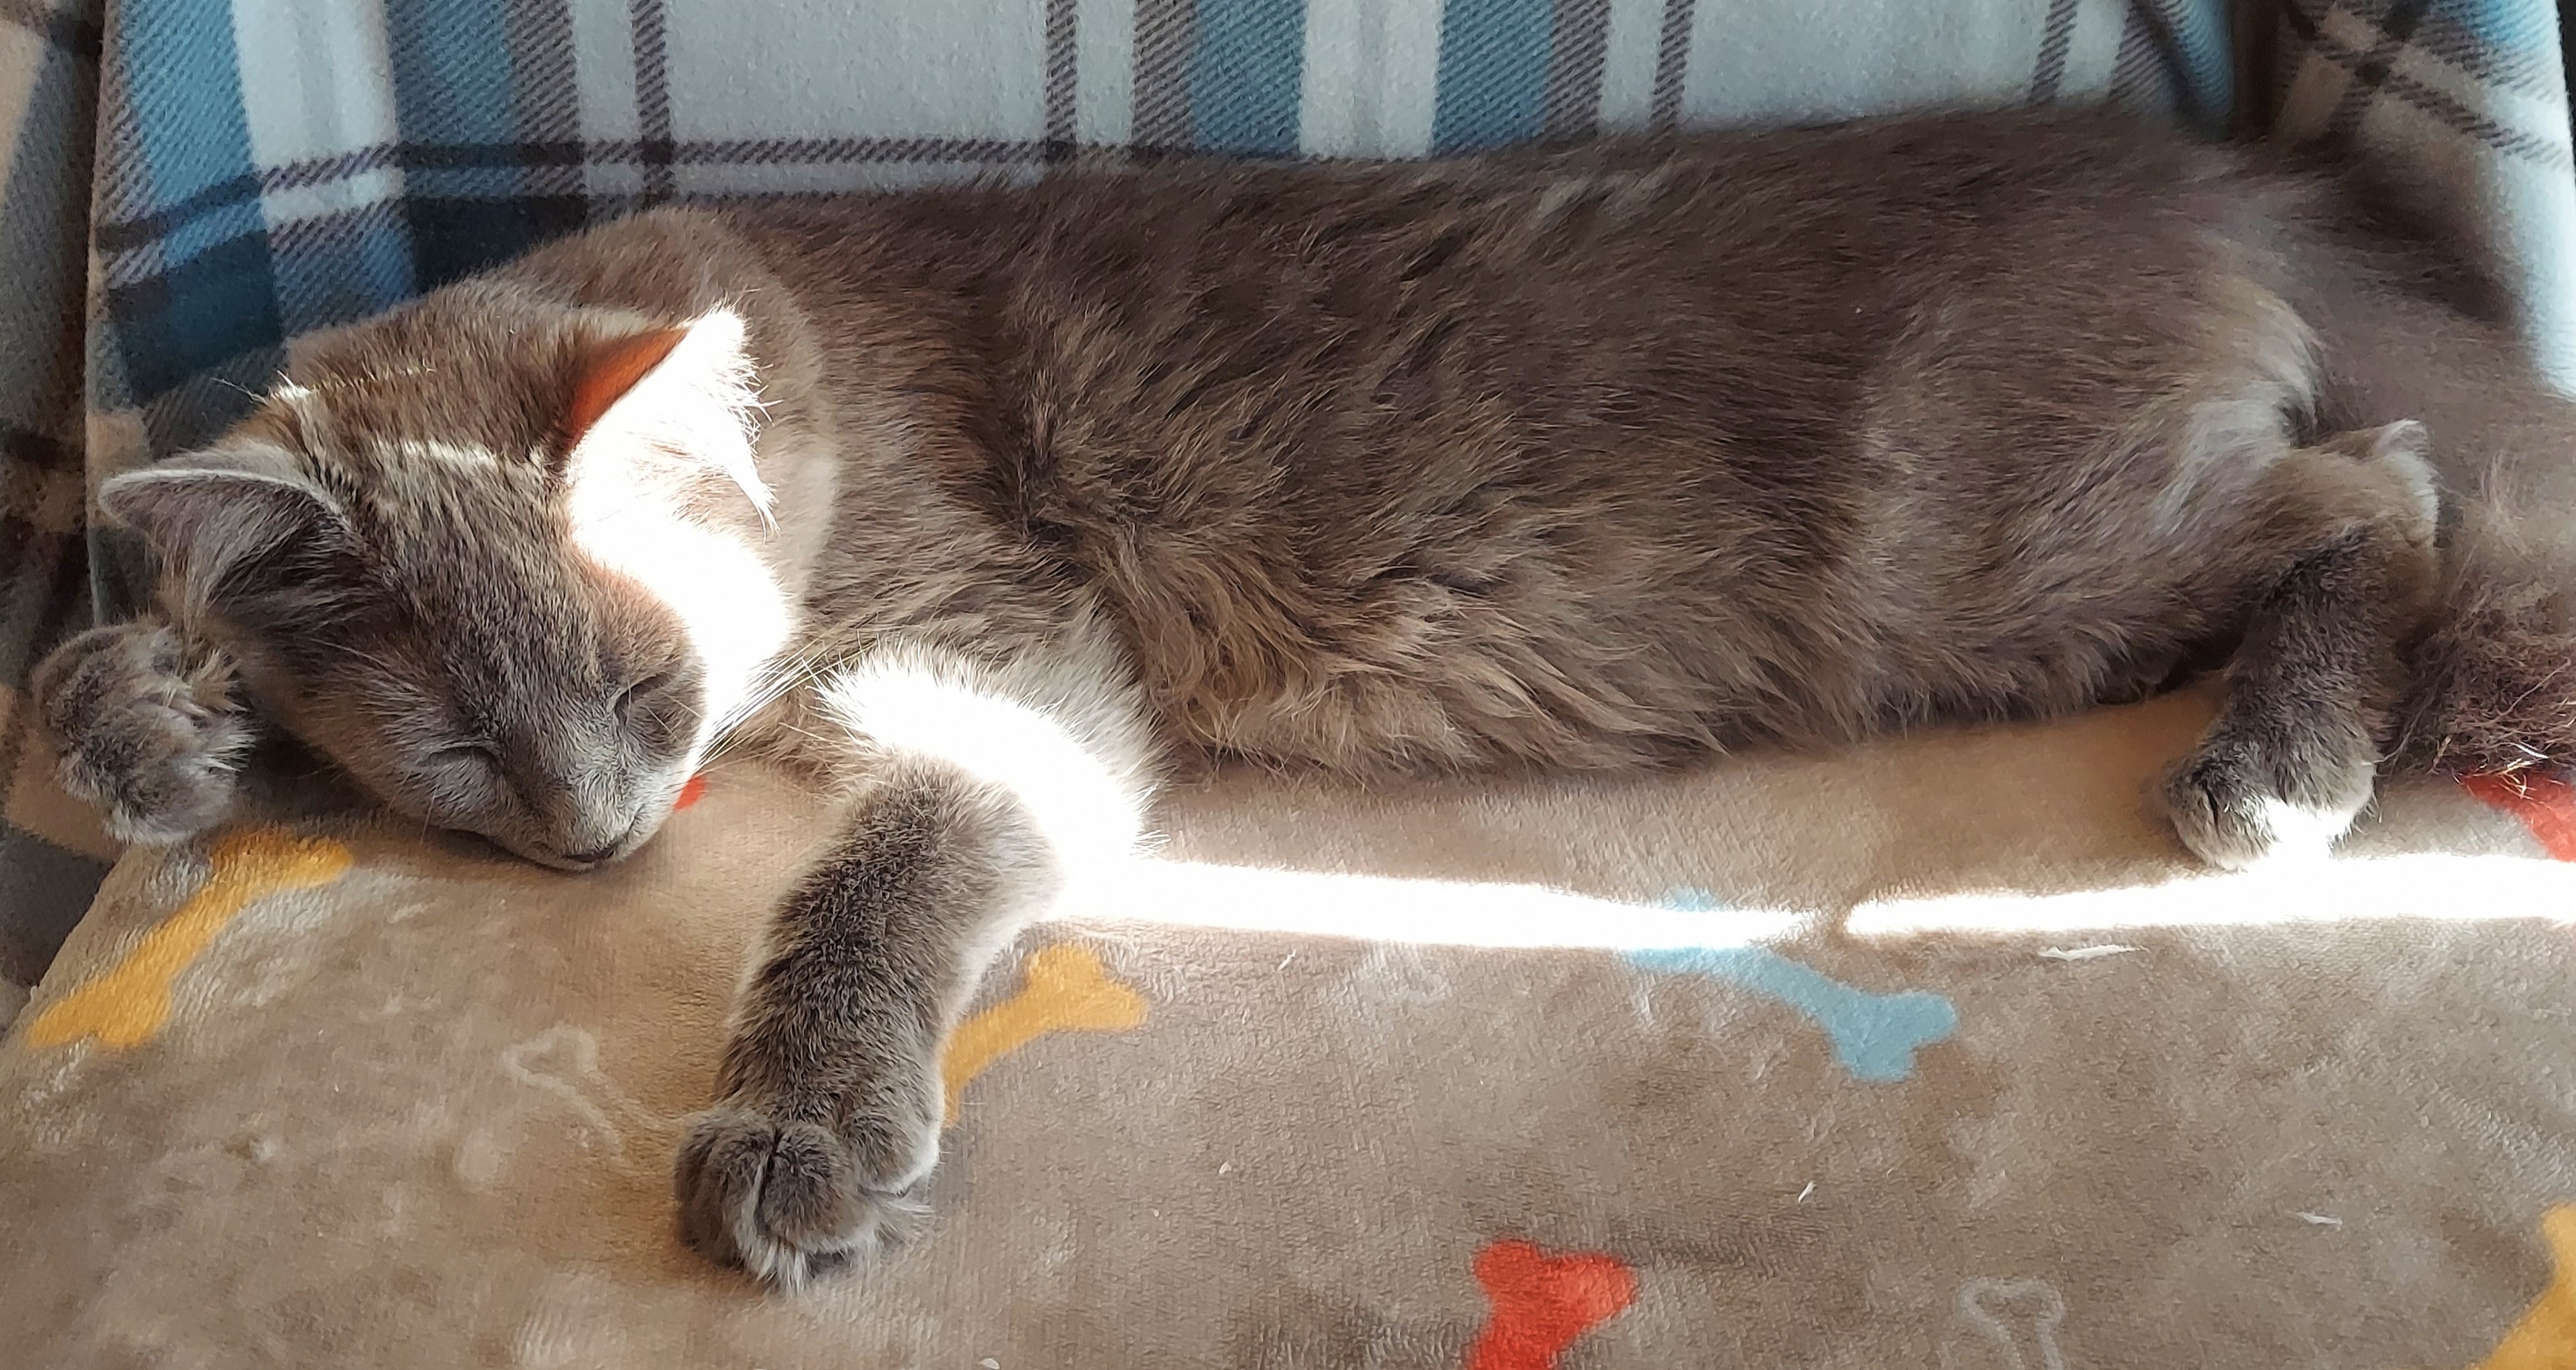 Grayson sleeping in the sunbeam.